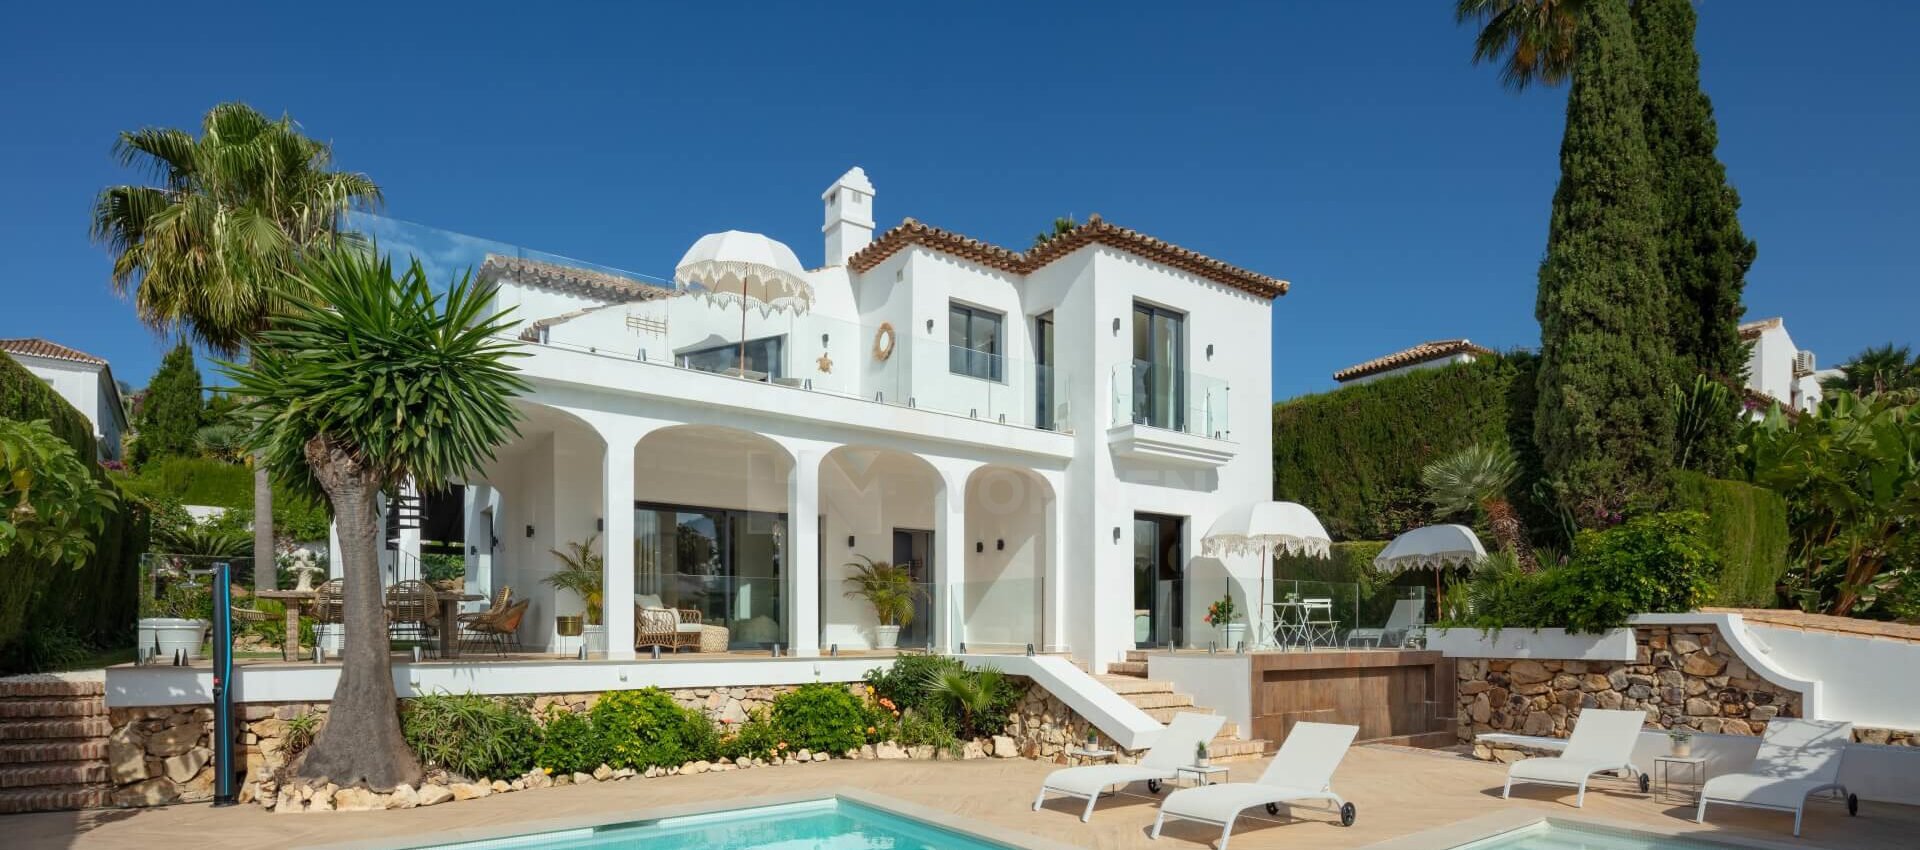 Klassische und moderne andalusische Villa in Nueva Andalucia Marbella